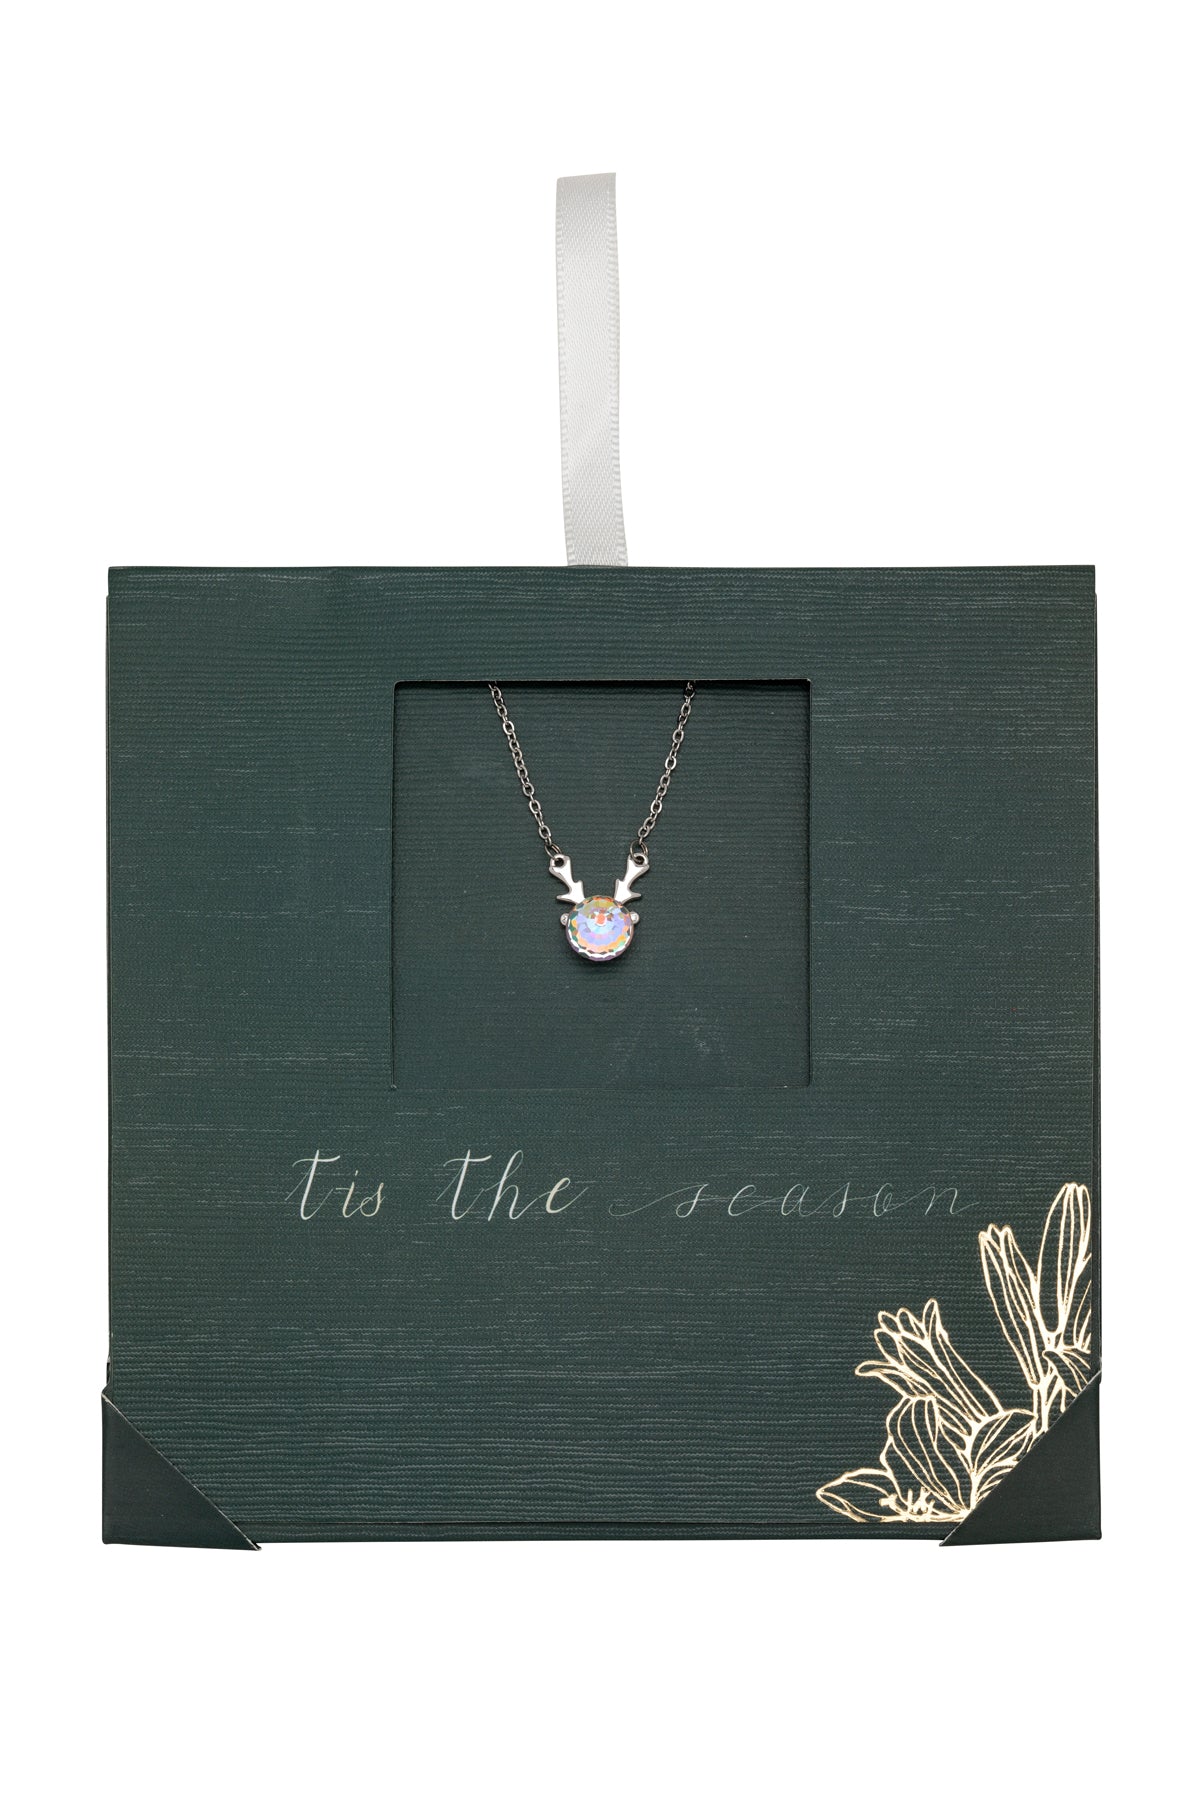 Aurora Borealis Crystal Deer Pendant Necklace - On Holiday Card